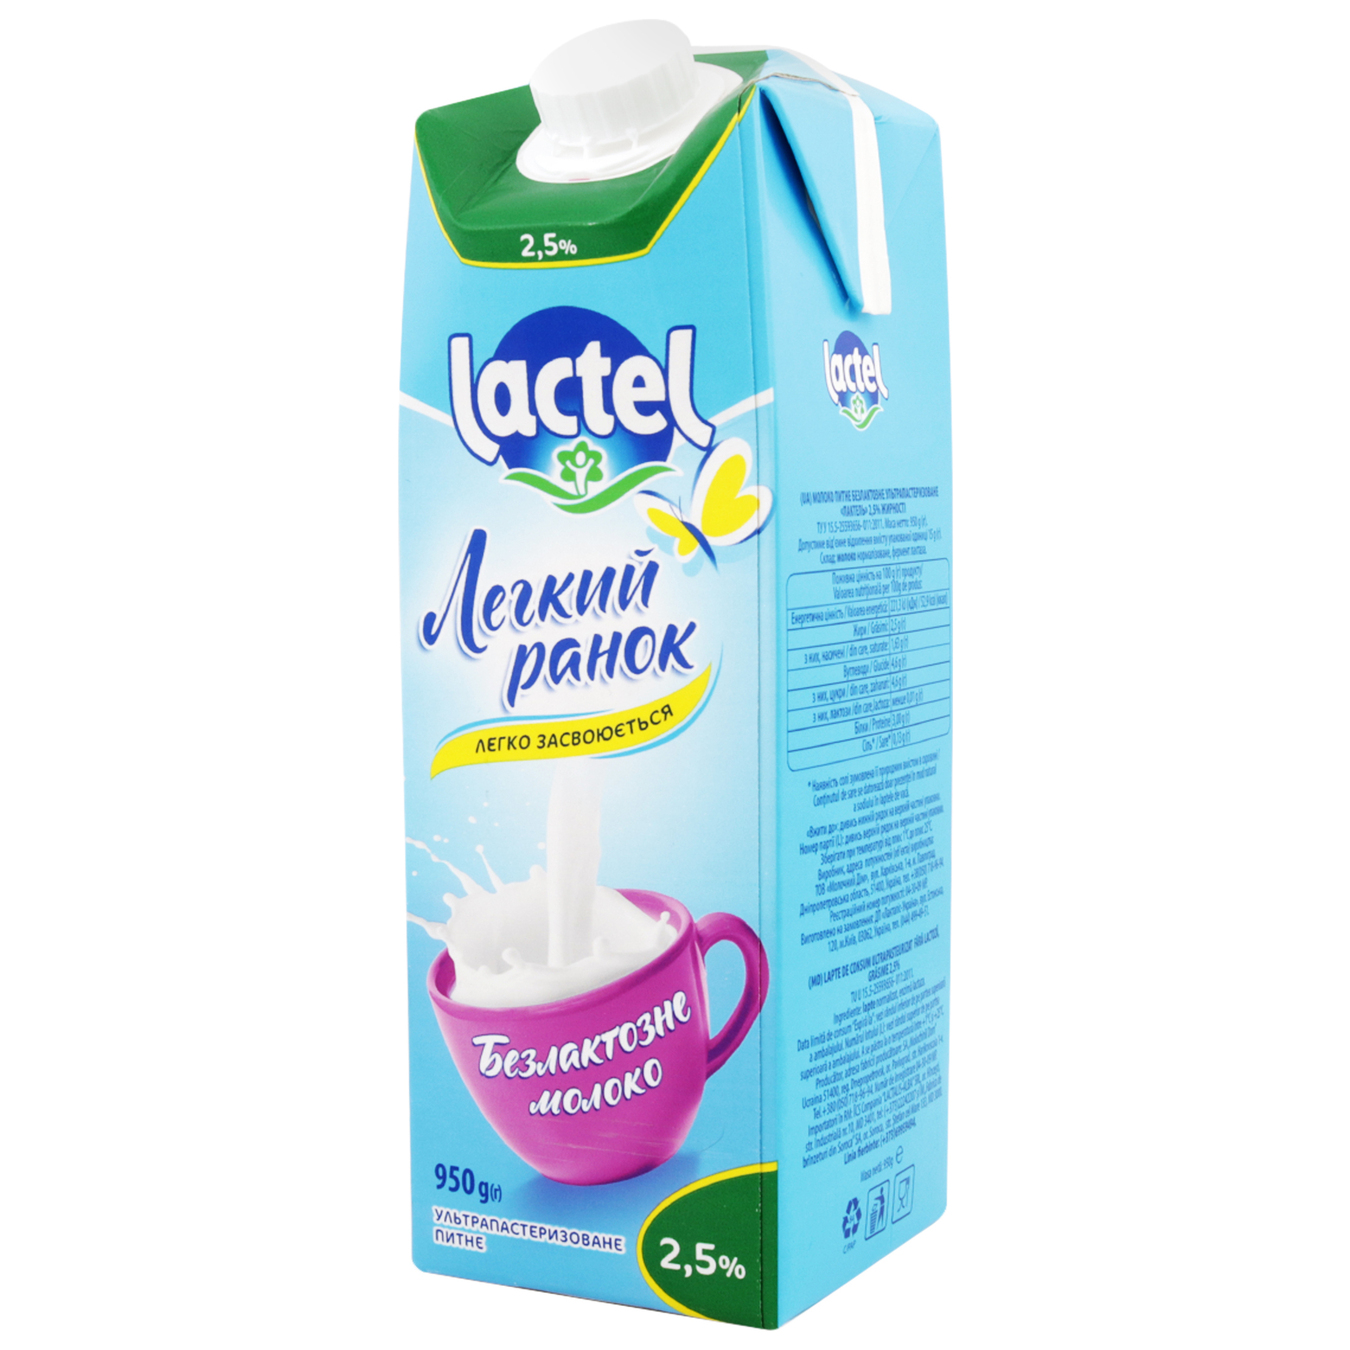 Lactel lactose-free ultra-pasteurized milk 2.5% 950g